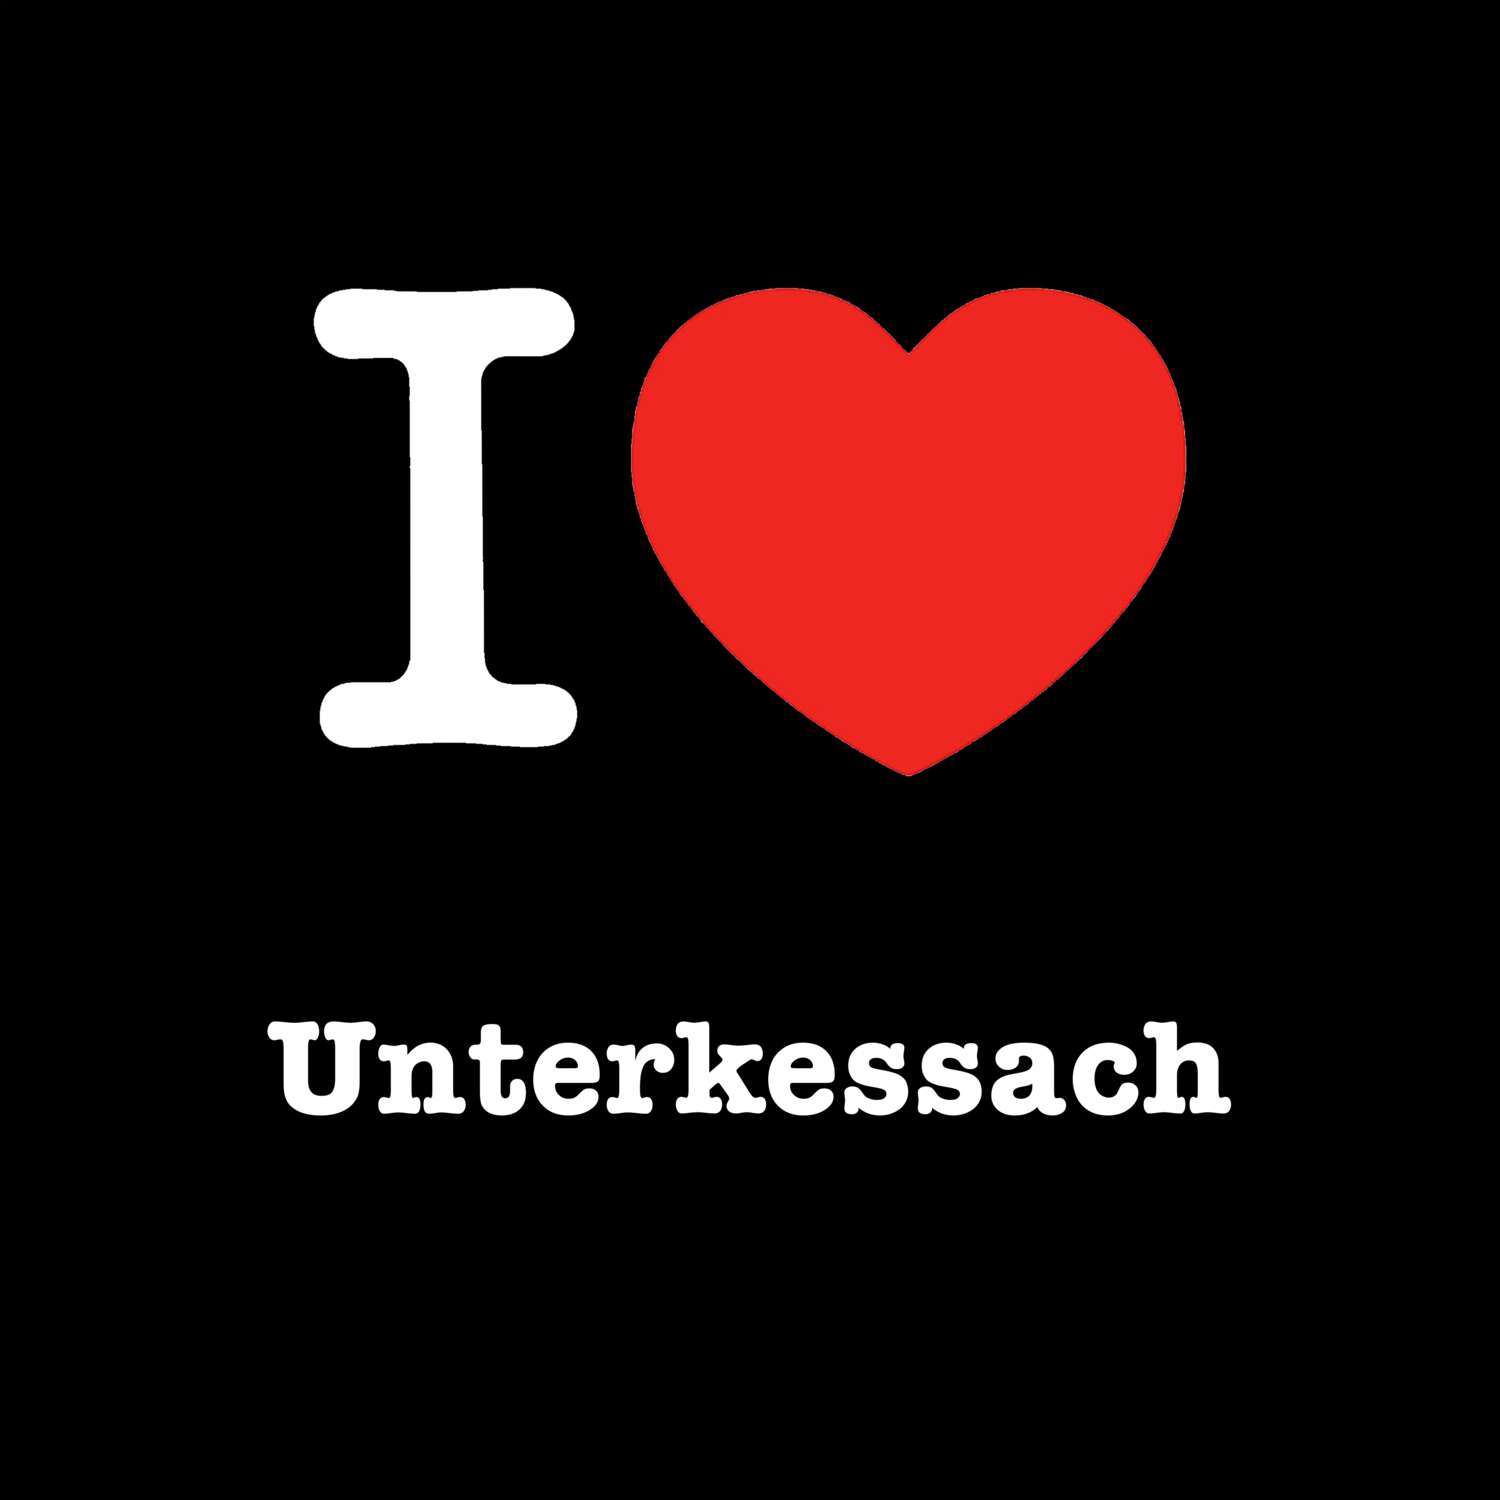 Unterkessach T-Shirt »I love«